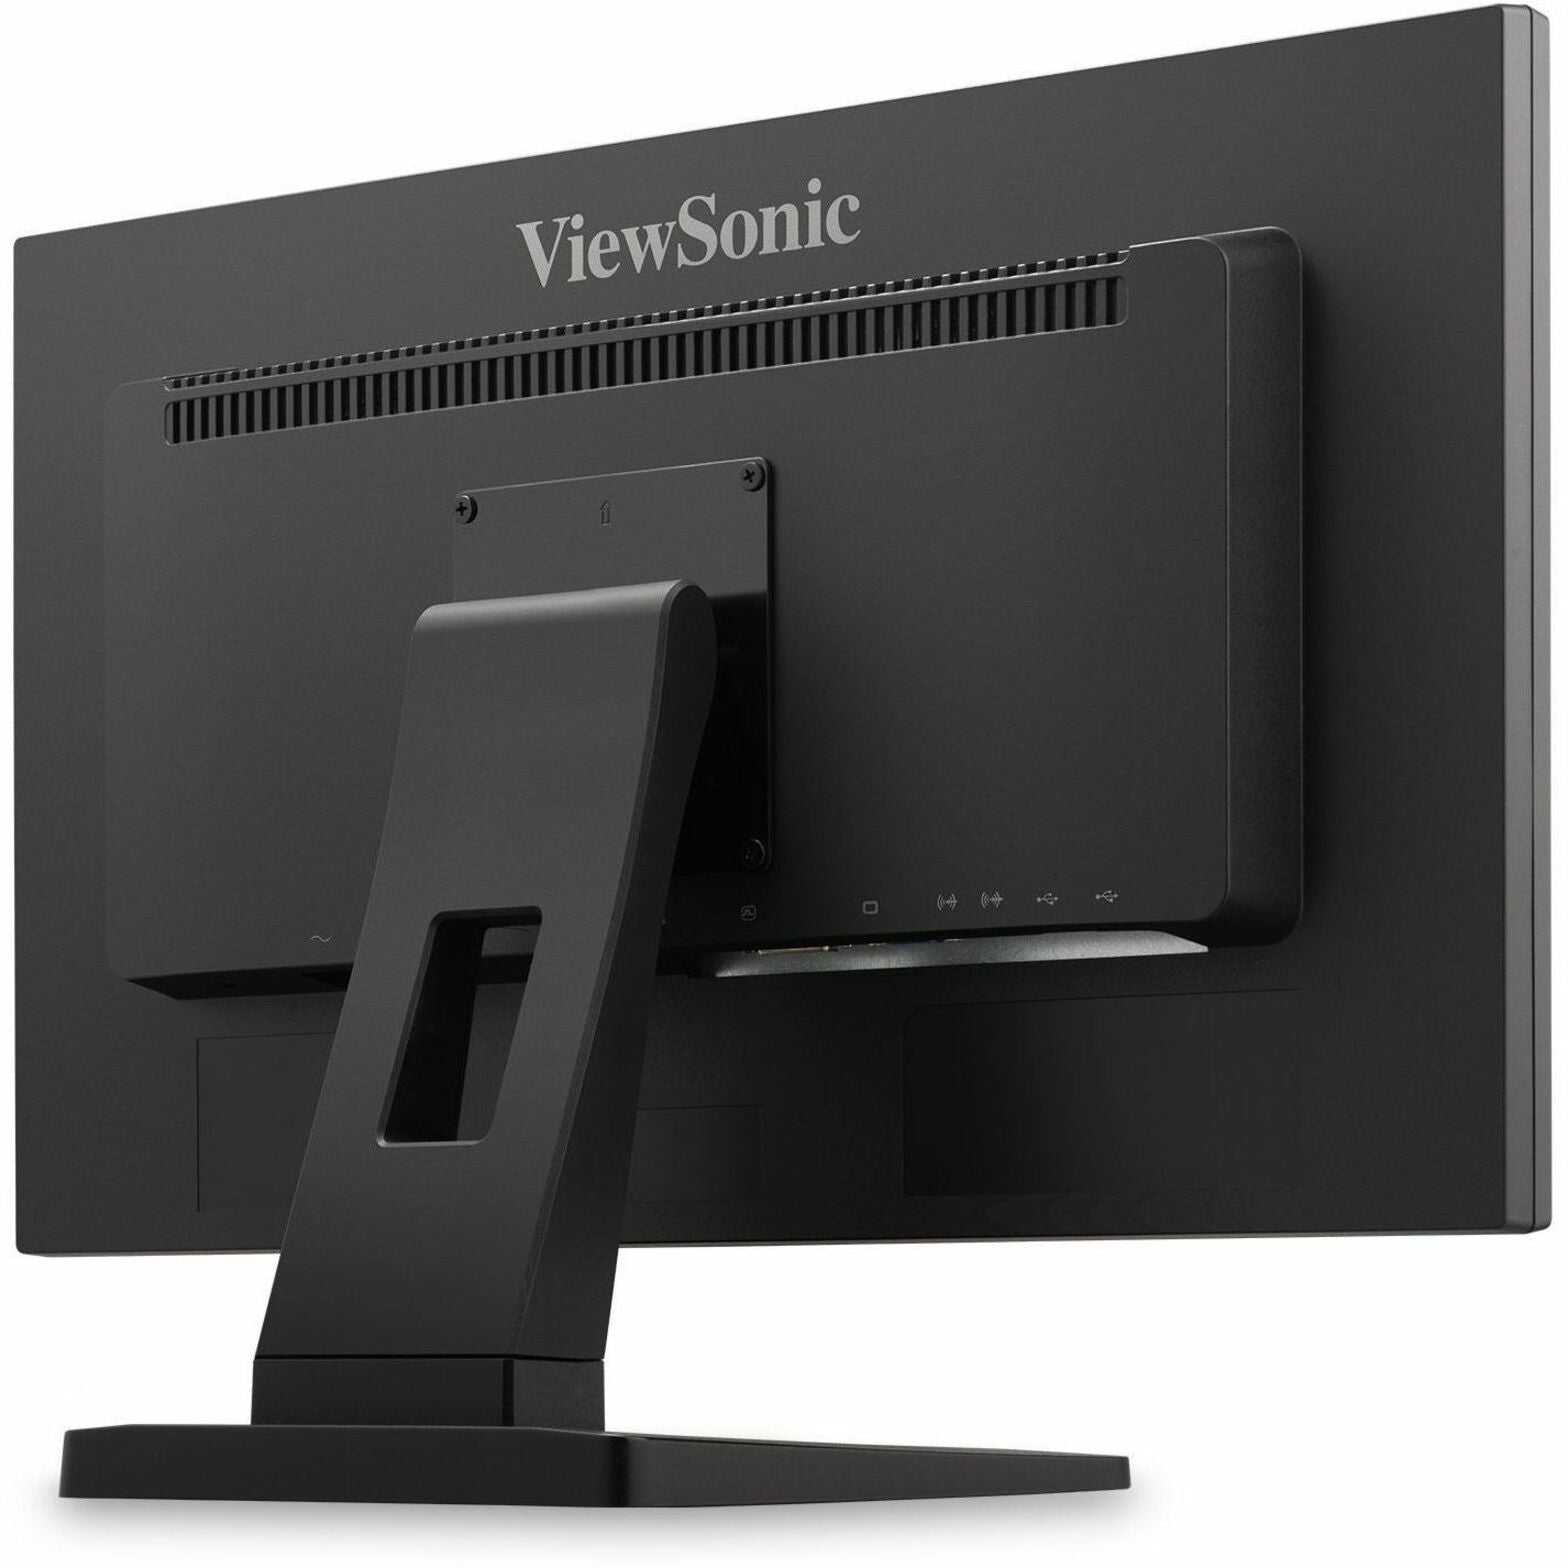 ViewSonic TD2211 22" LCD FHD Touch Screen Monitor, VGA HDMI DVI USB, Water Resistant, Anti-glare